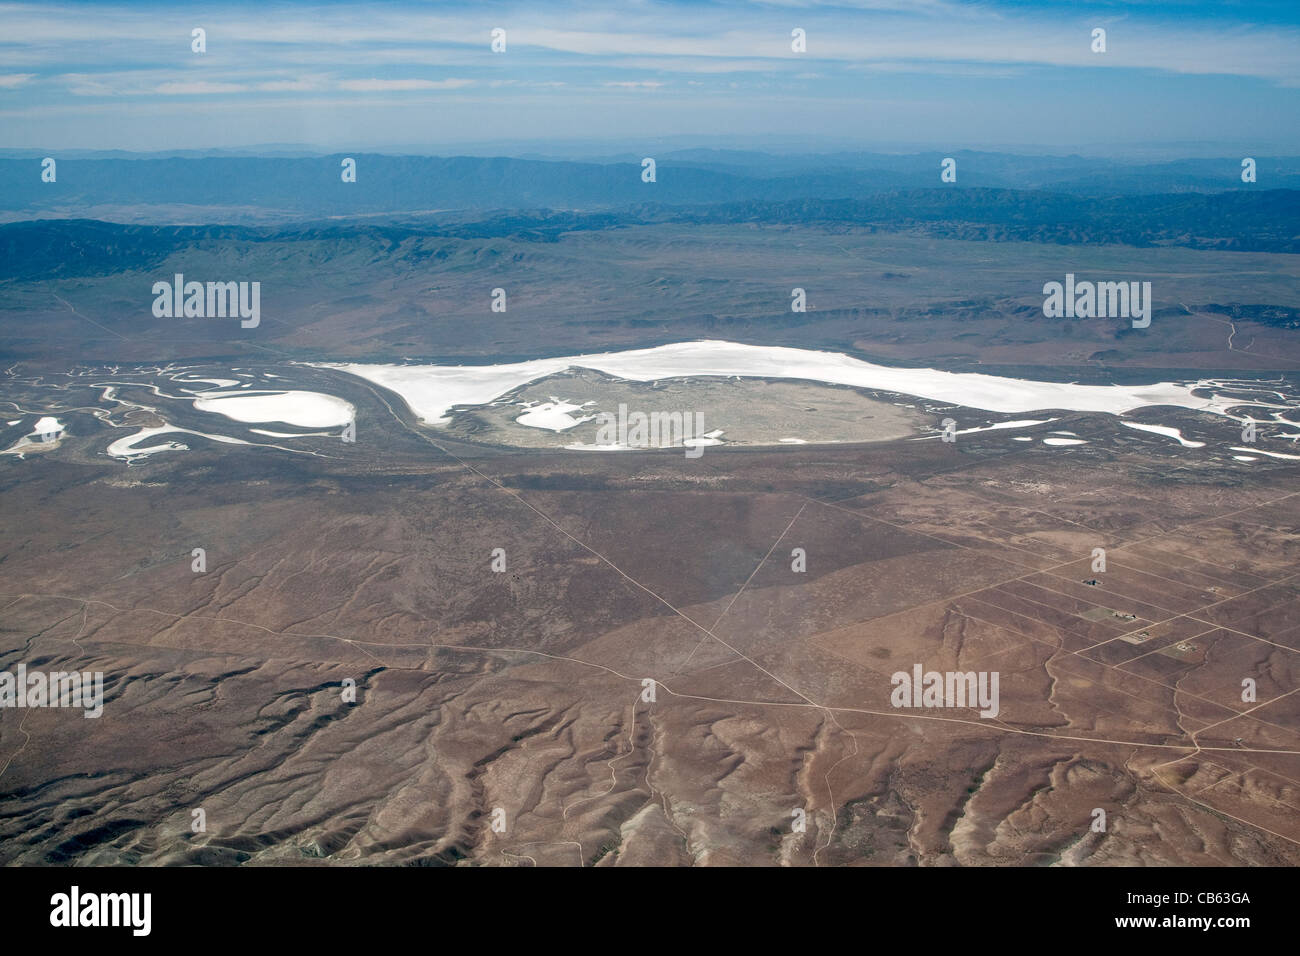 Eine Luftaufnahme des Soda-Sees in der Carrizo Plain of California. Stockfoto